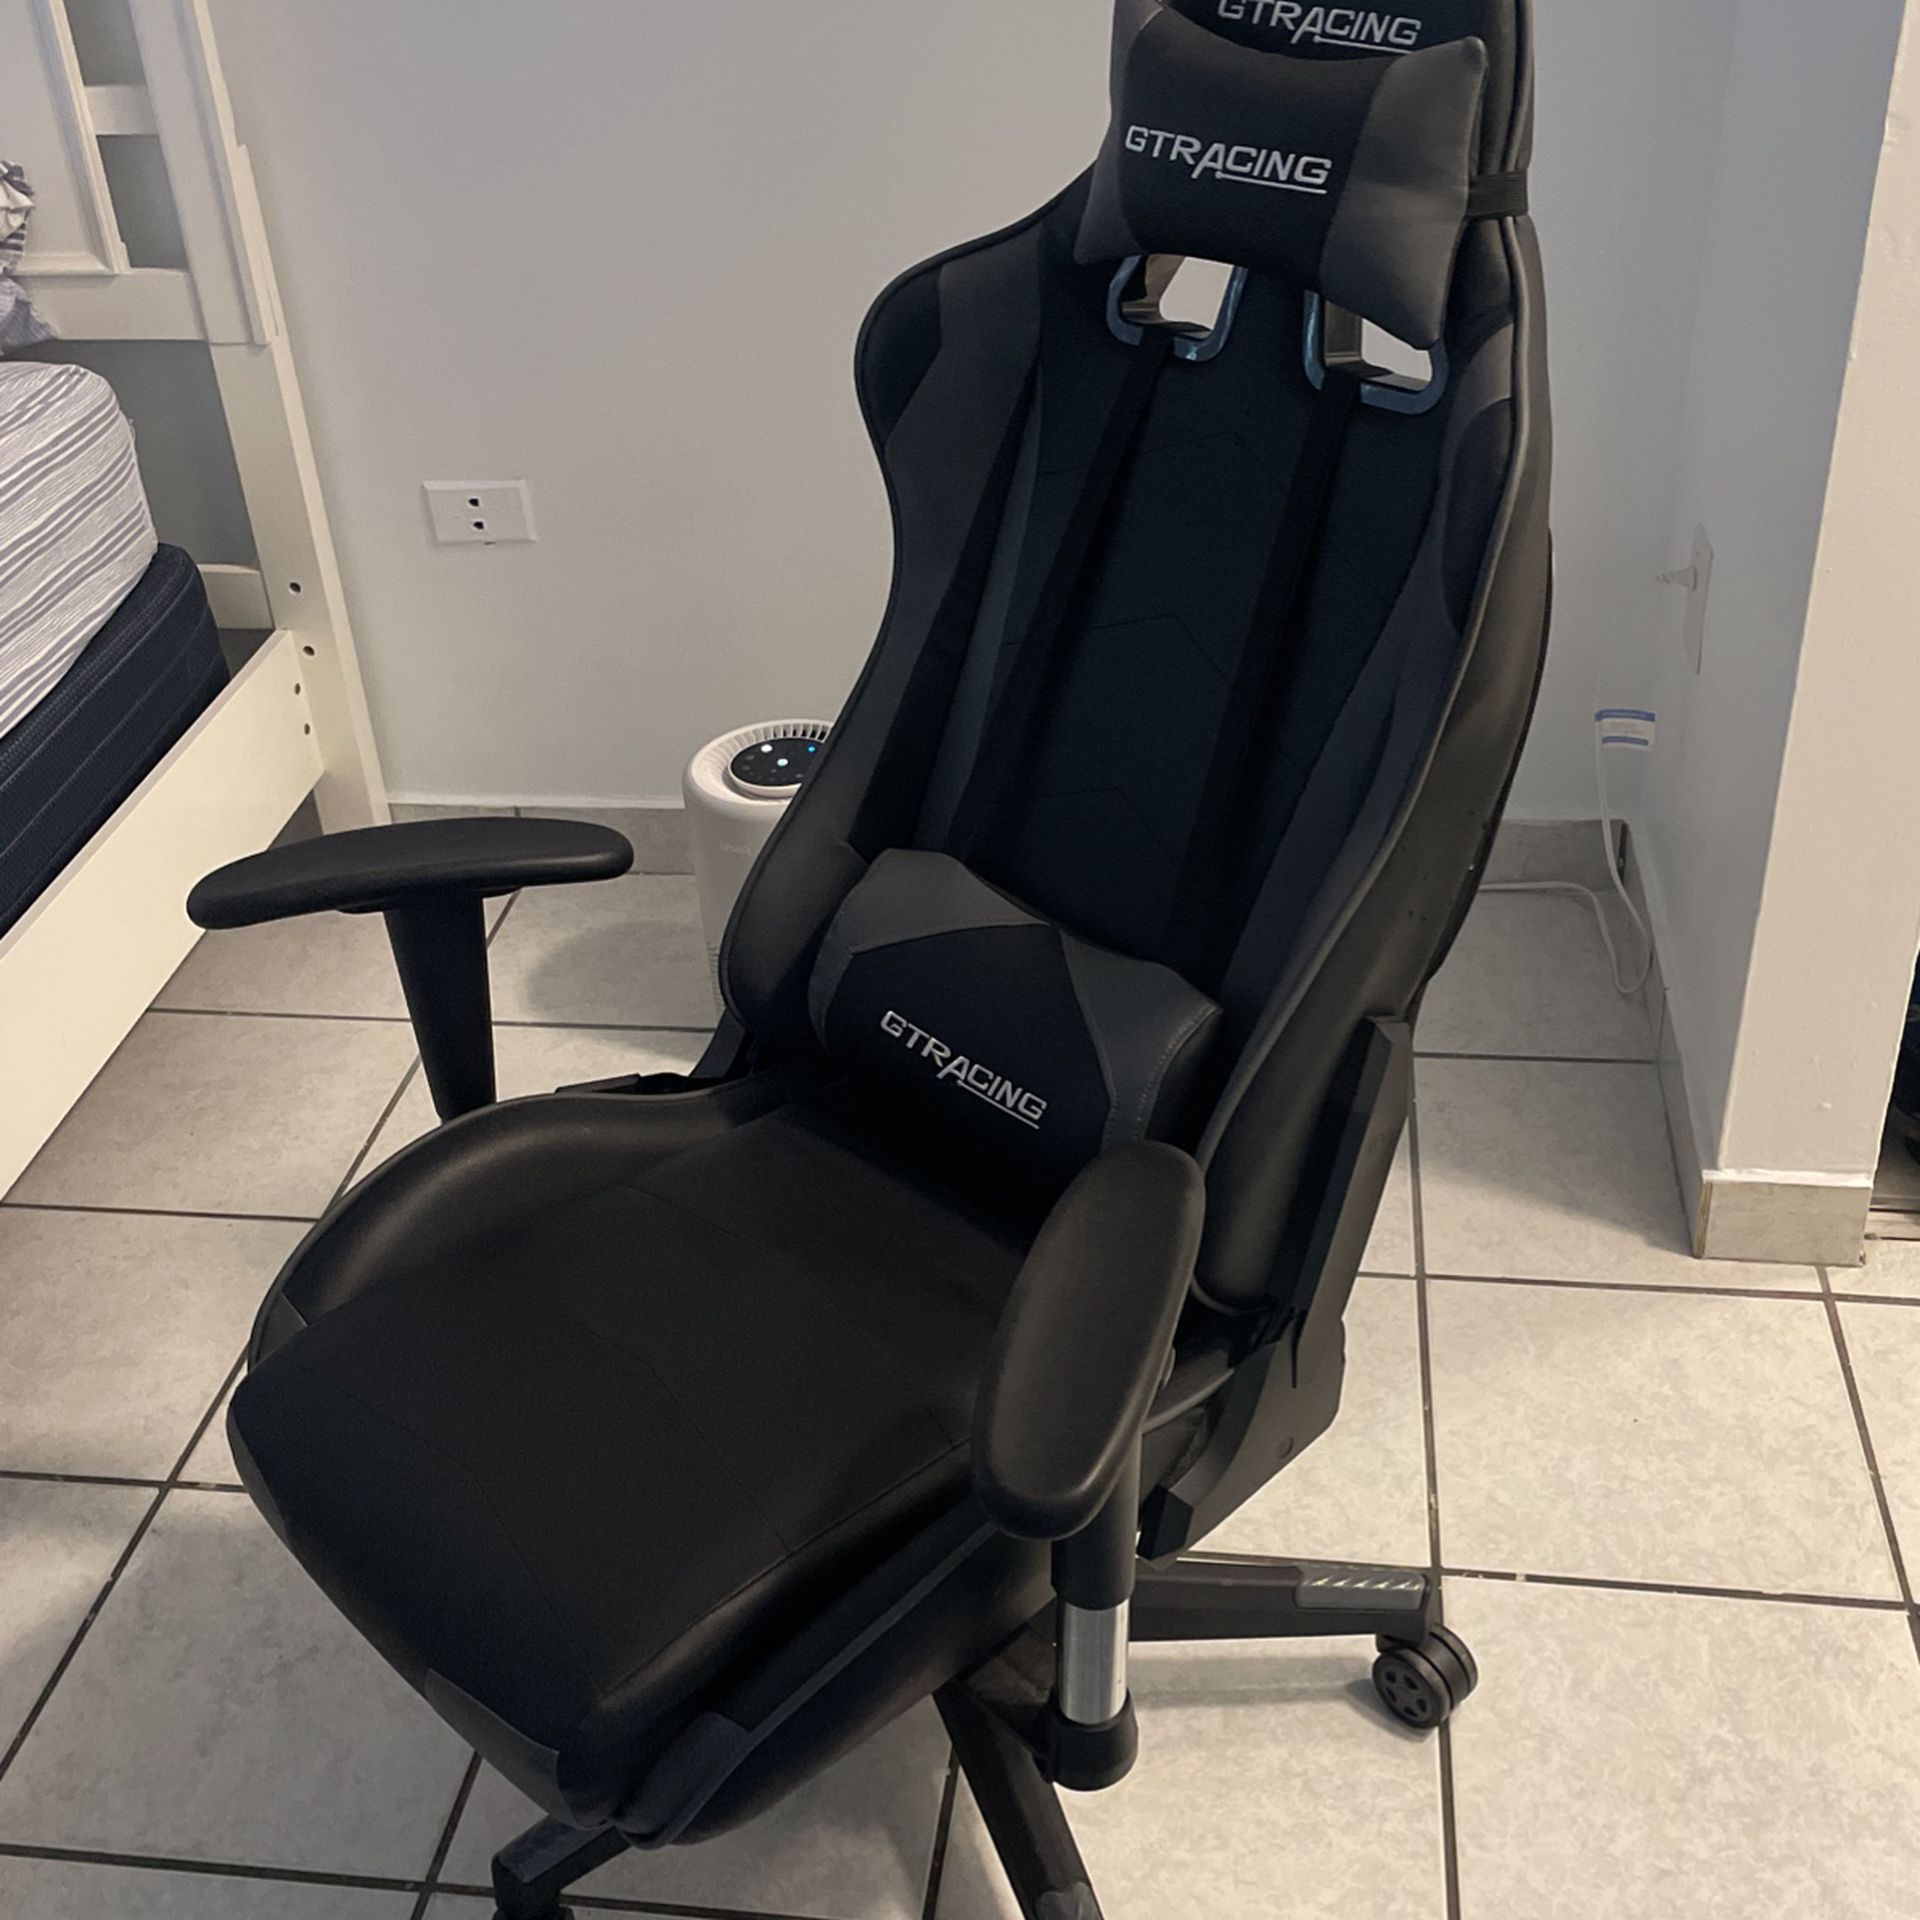 Game Chair - GTR racing Gaming Chair